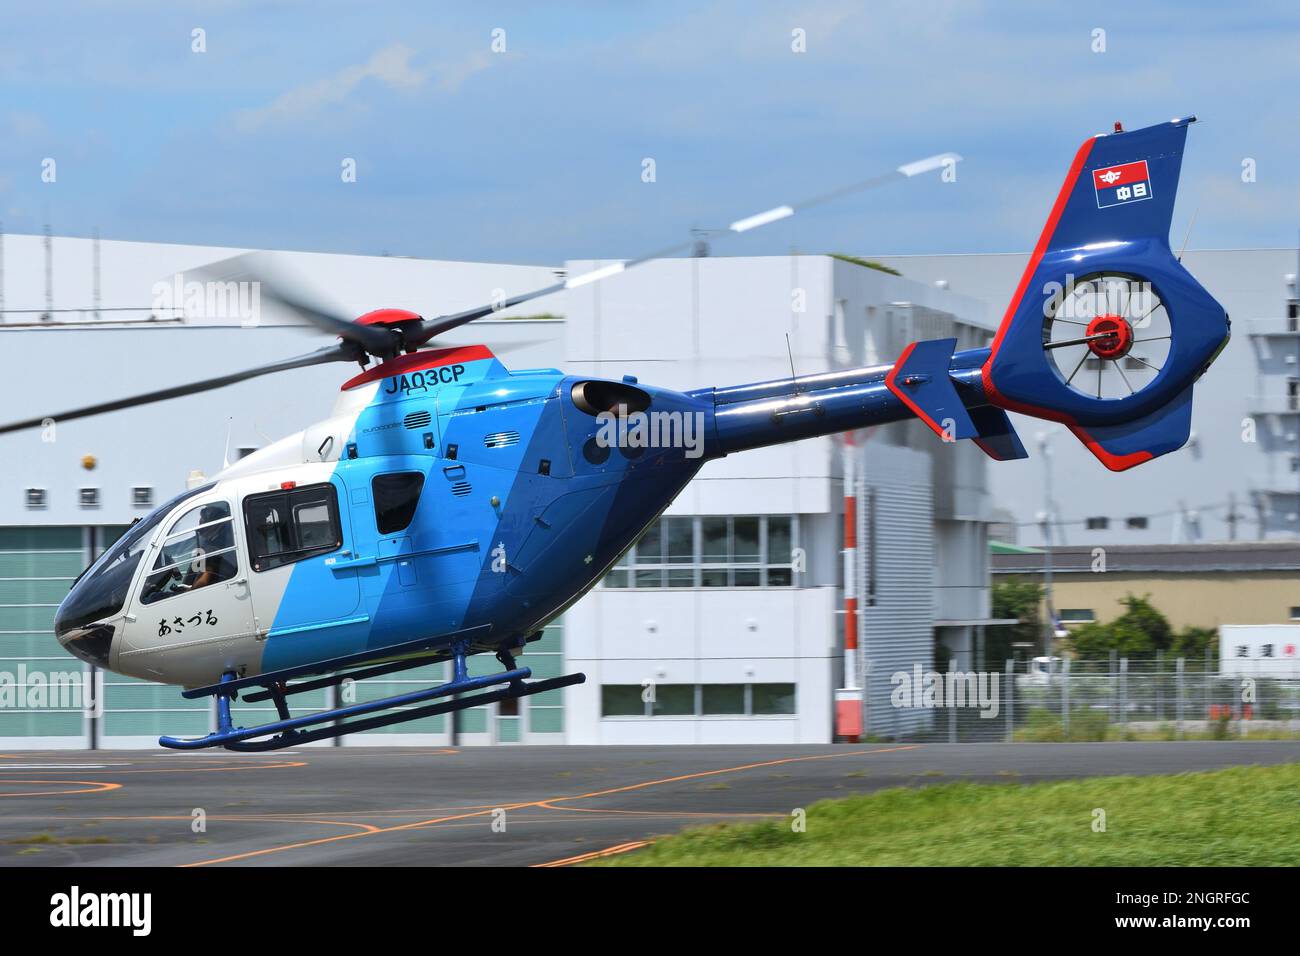 Tokyo, Japan - August 11, 2021: Chunichi Shimbun Eurocopter EC135P2 (JA03CP) light utility helicopter. Stock Photo